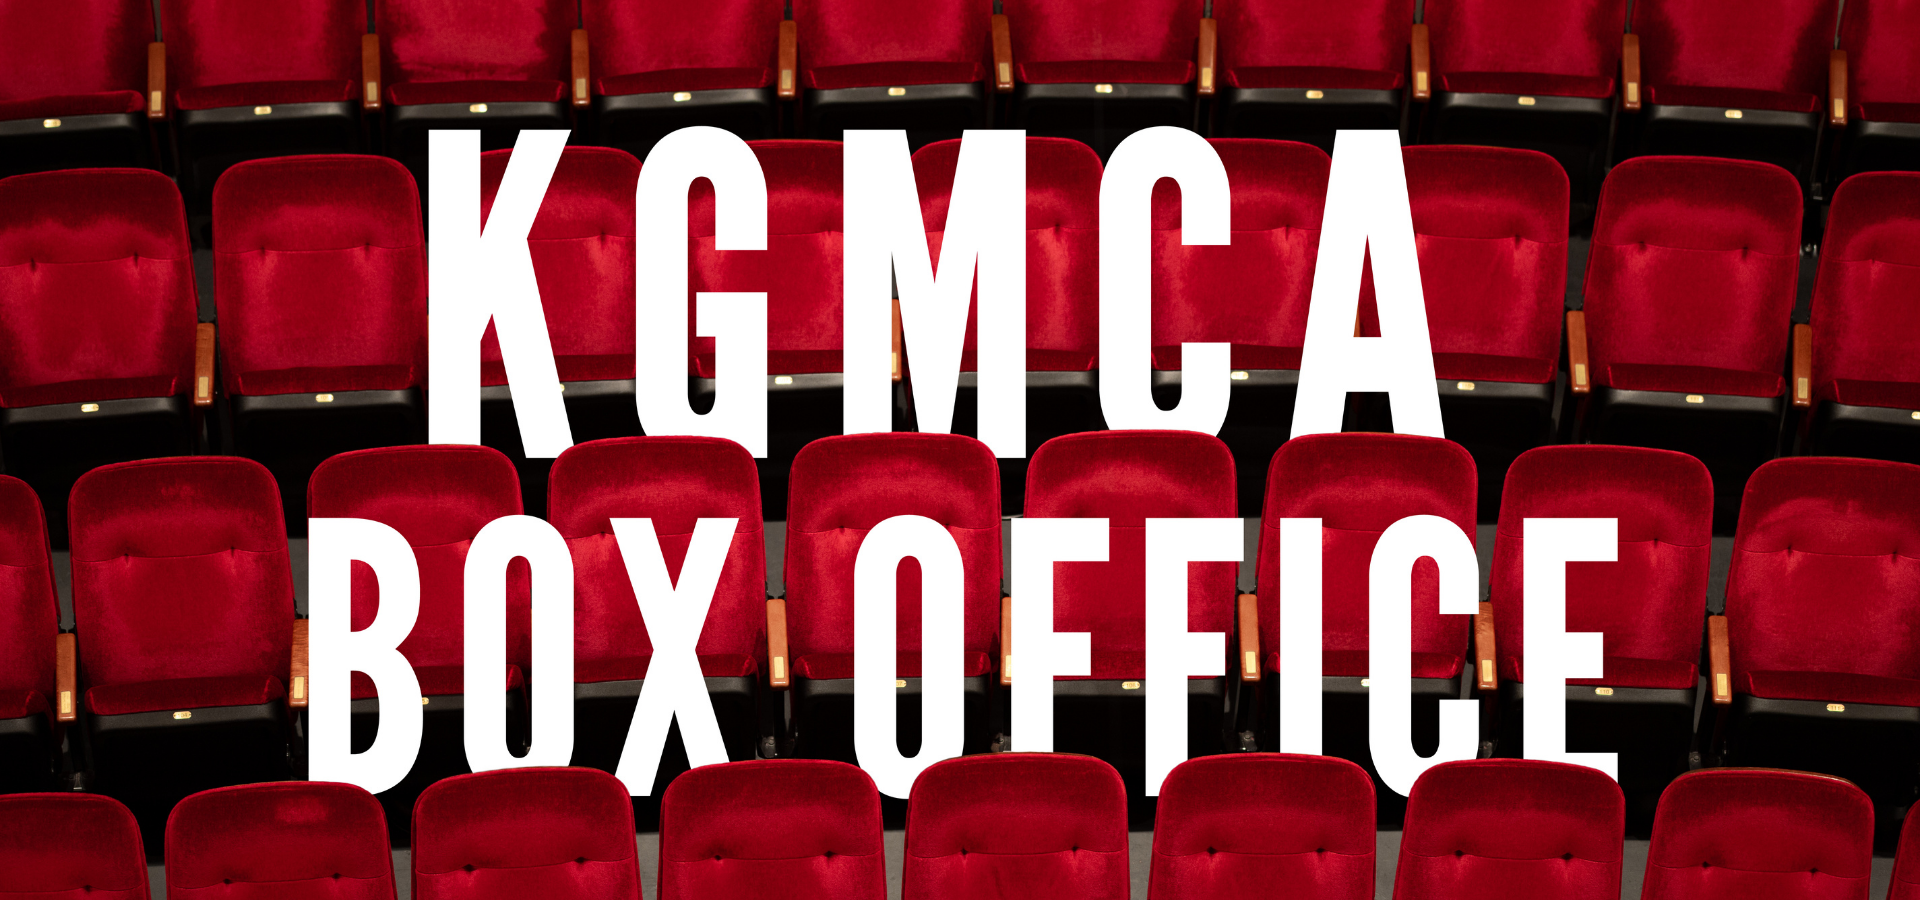 kgmca-box-office-image.jpg